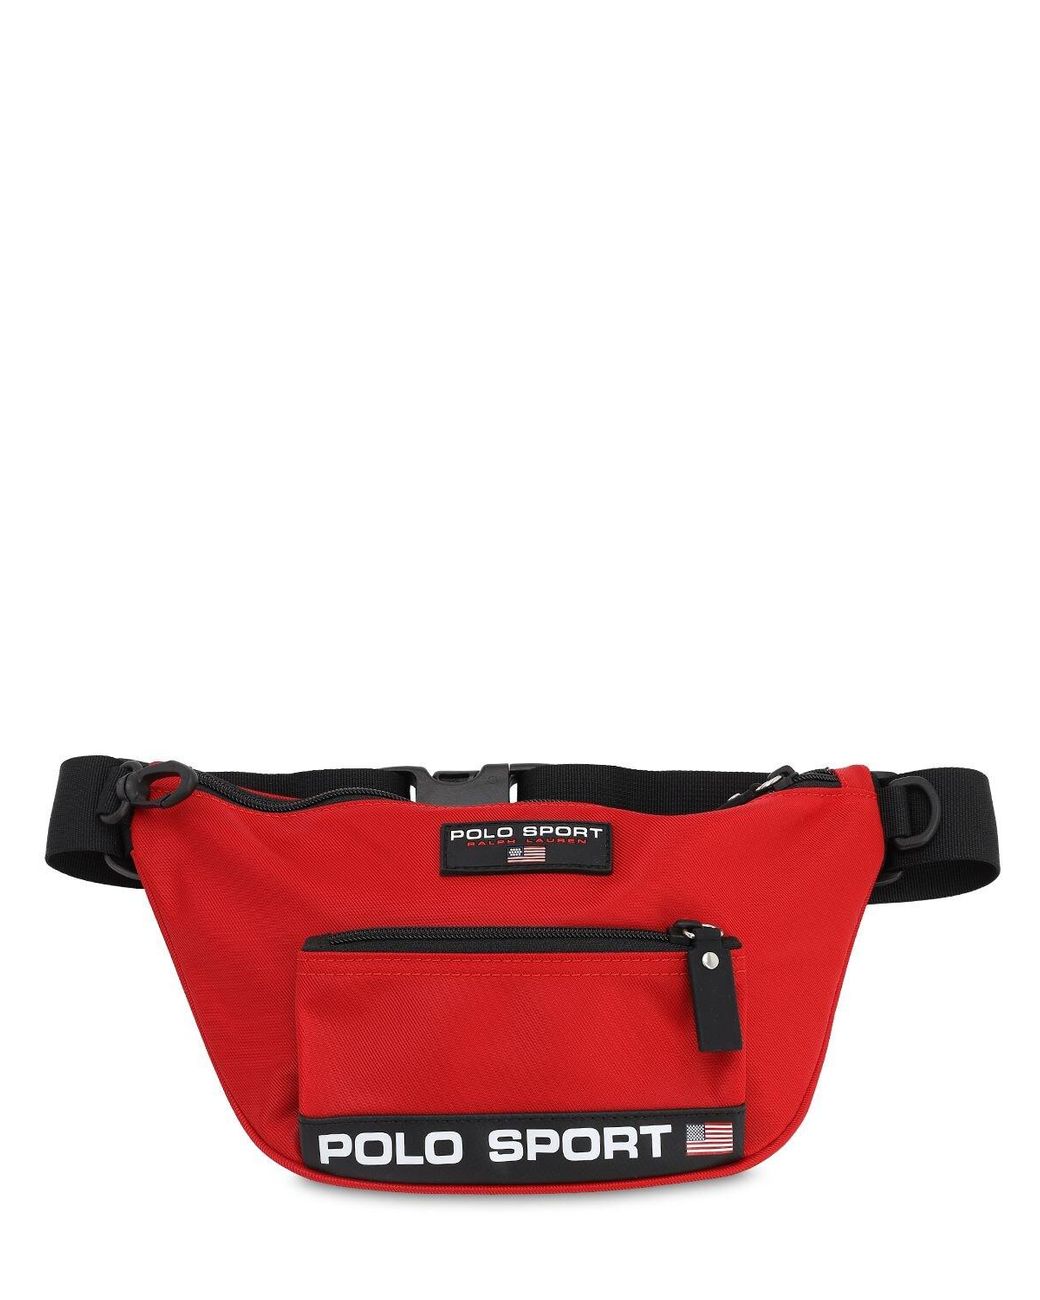 Polo Ralph Lauren Synthetic Polo Sport Nylon Belt Bag in Red for Men - Lyst